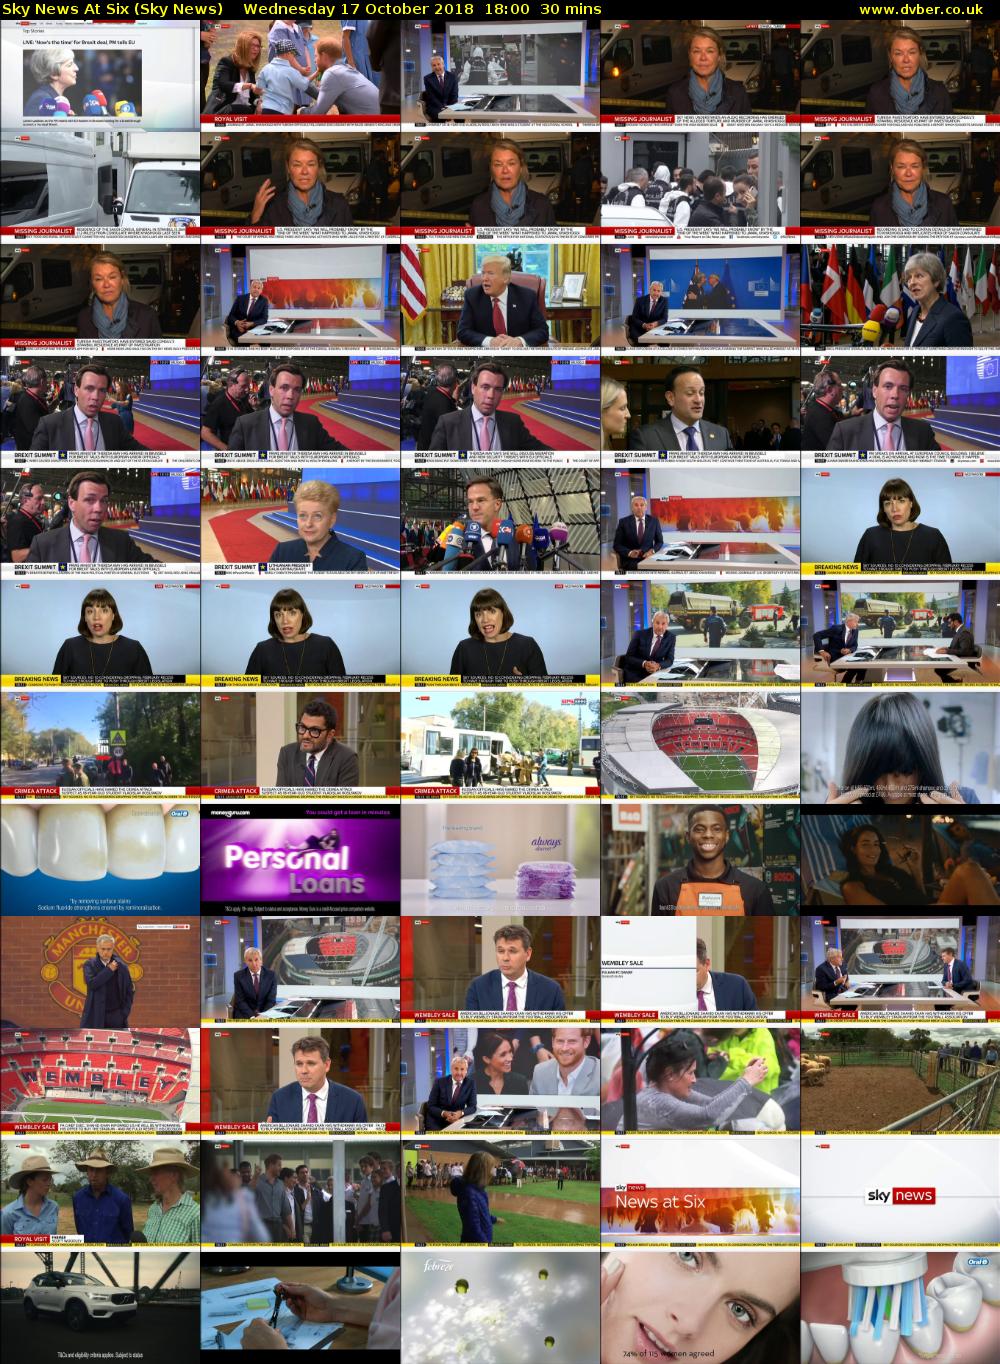 Sky News At Six (Sky News) Wednesday 17 October 2018 18:00 - 18:30